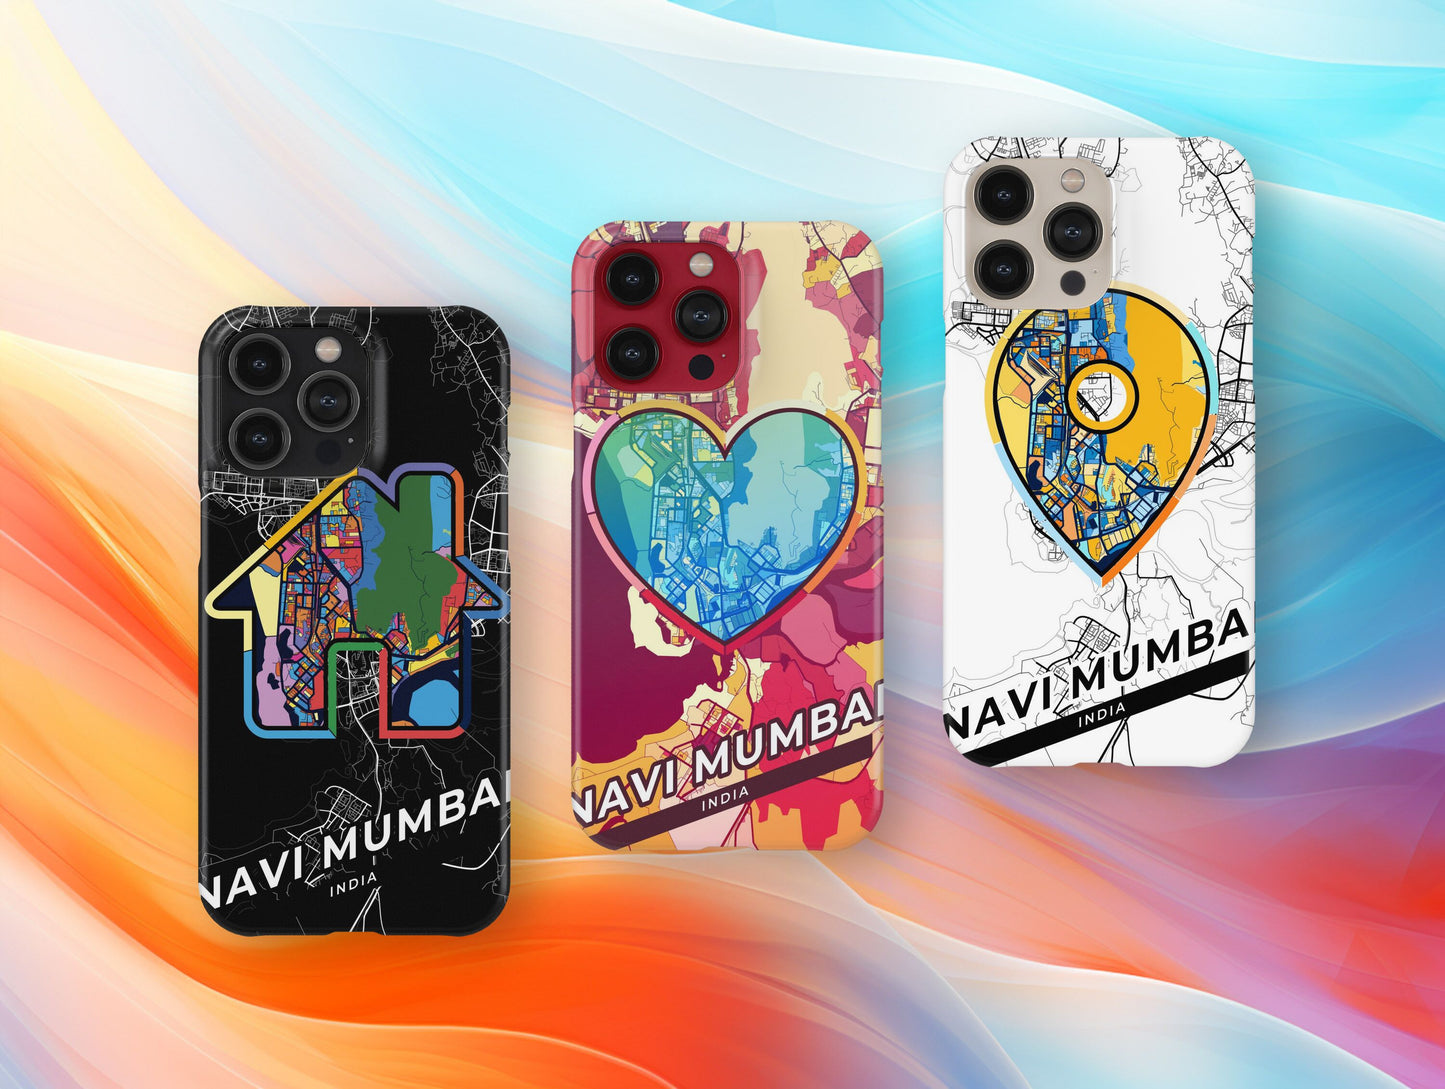 Navi Mumbai India slim phone case with colorful icon